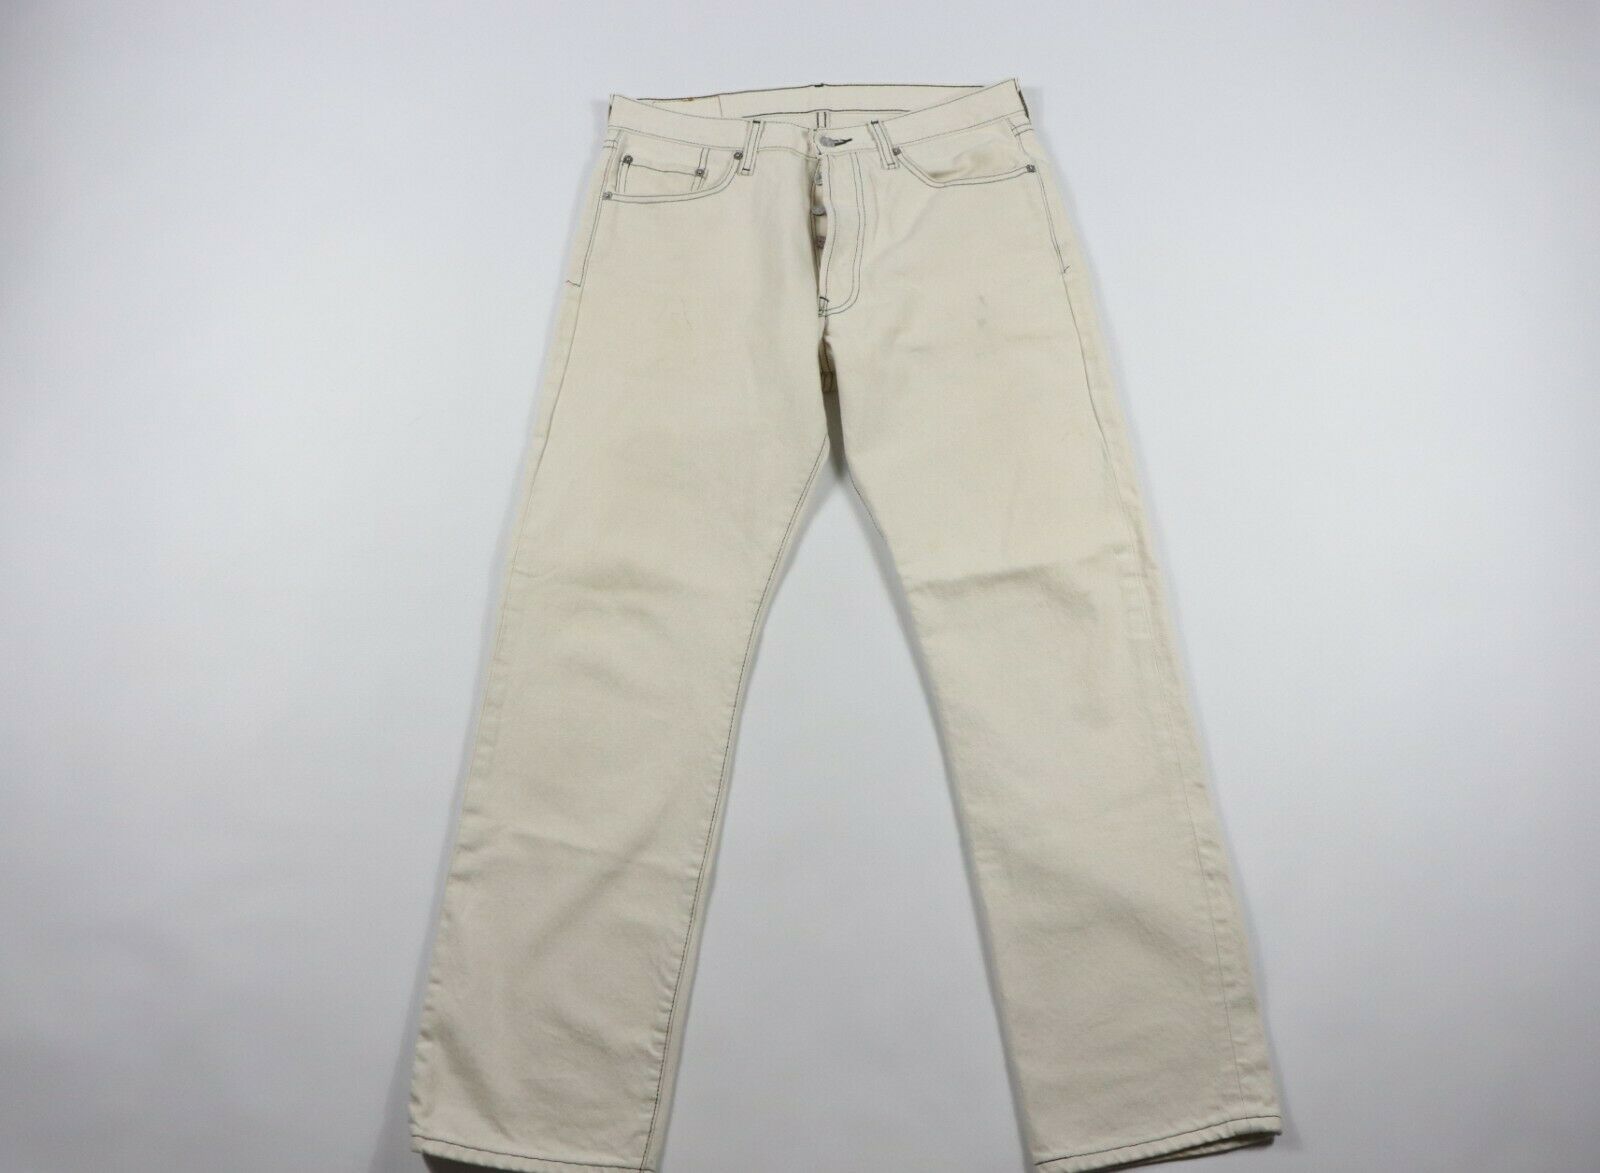 Hommes Jeans Pantalon Denim trousers Classic Slim fit Used Washed regular waist l34